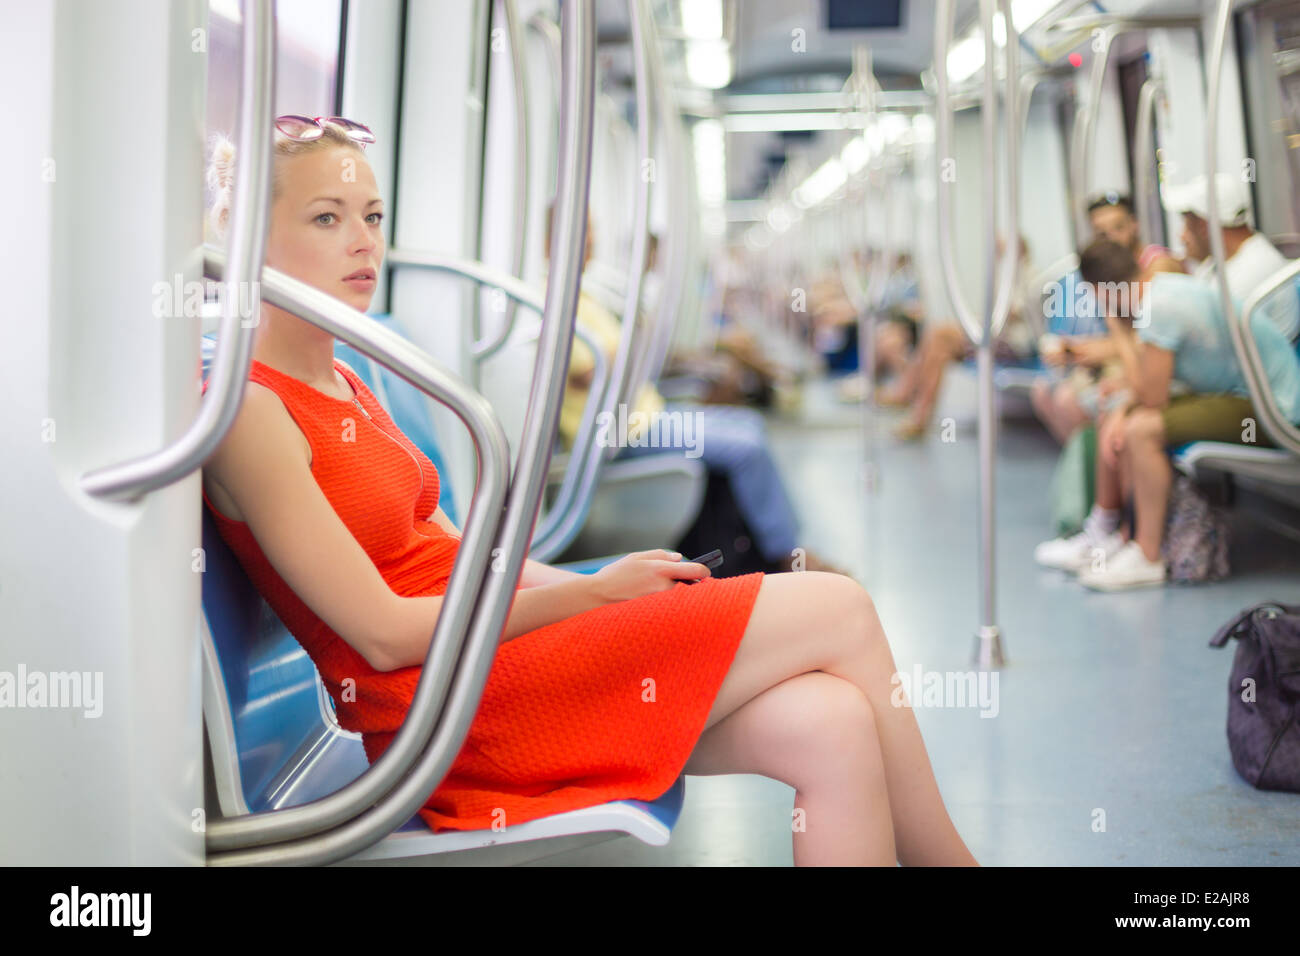 Signora viaggiando con la metro. Foto Stock